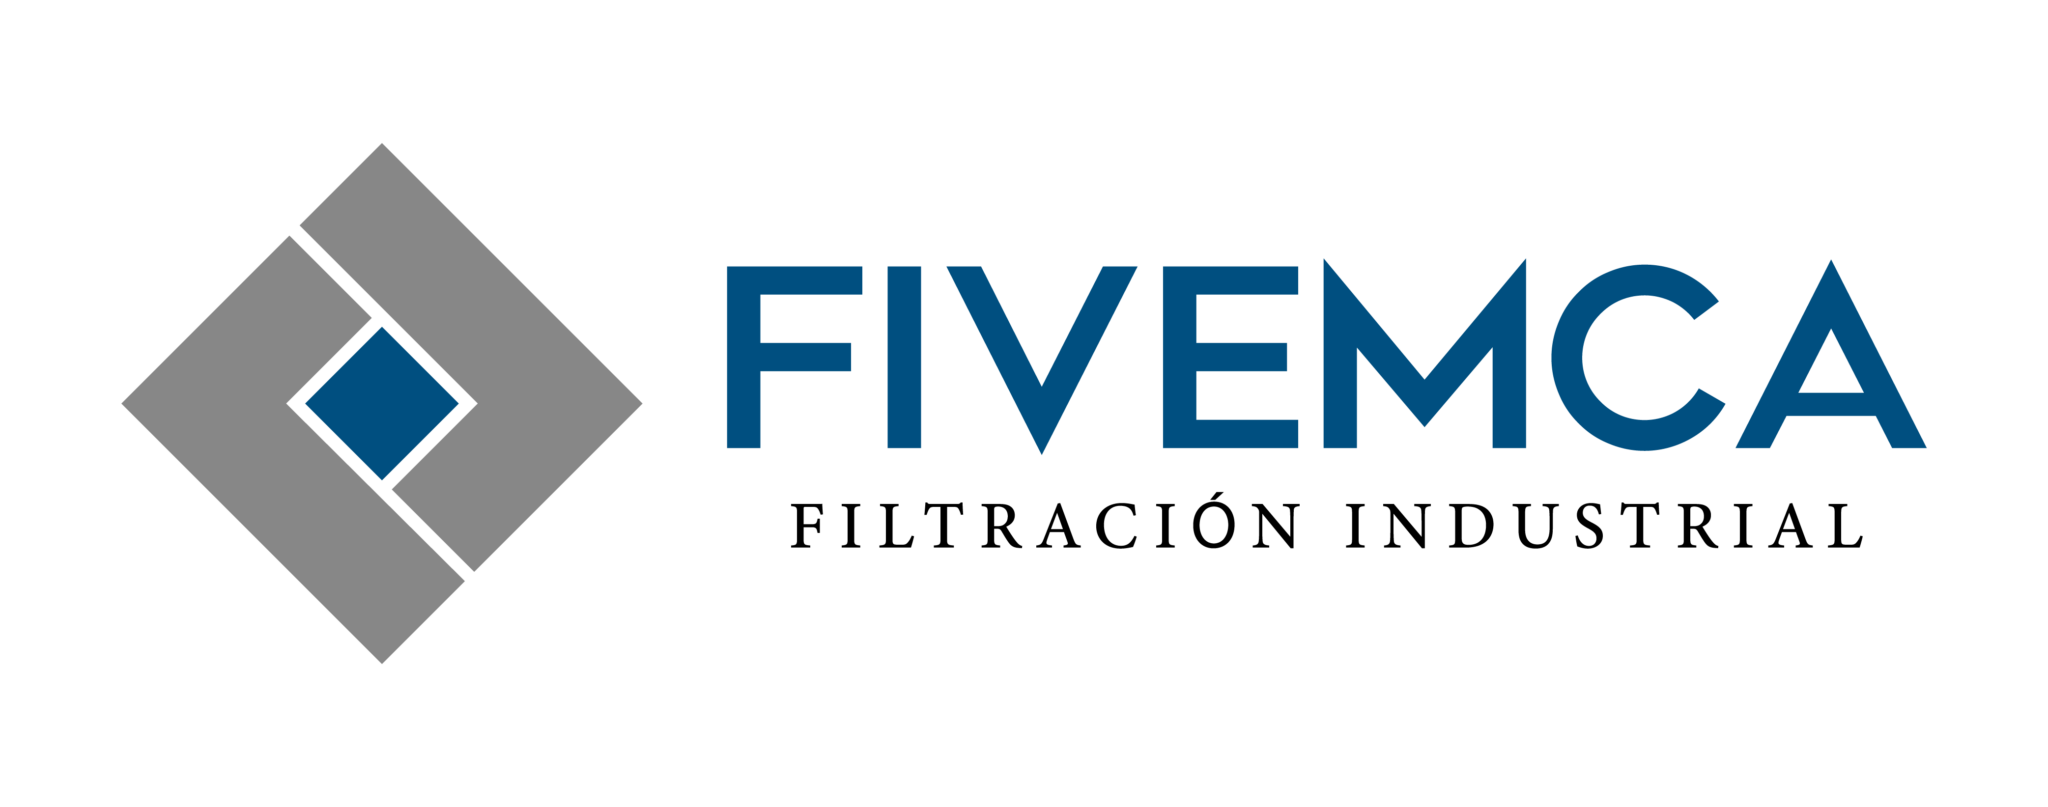 Fivemca Logo